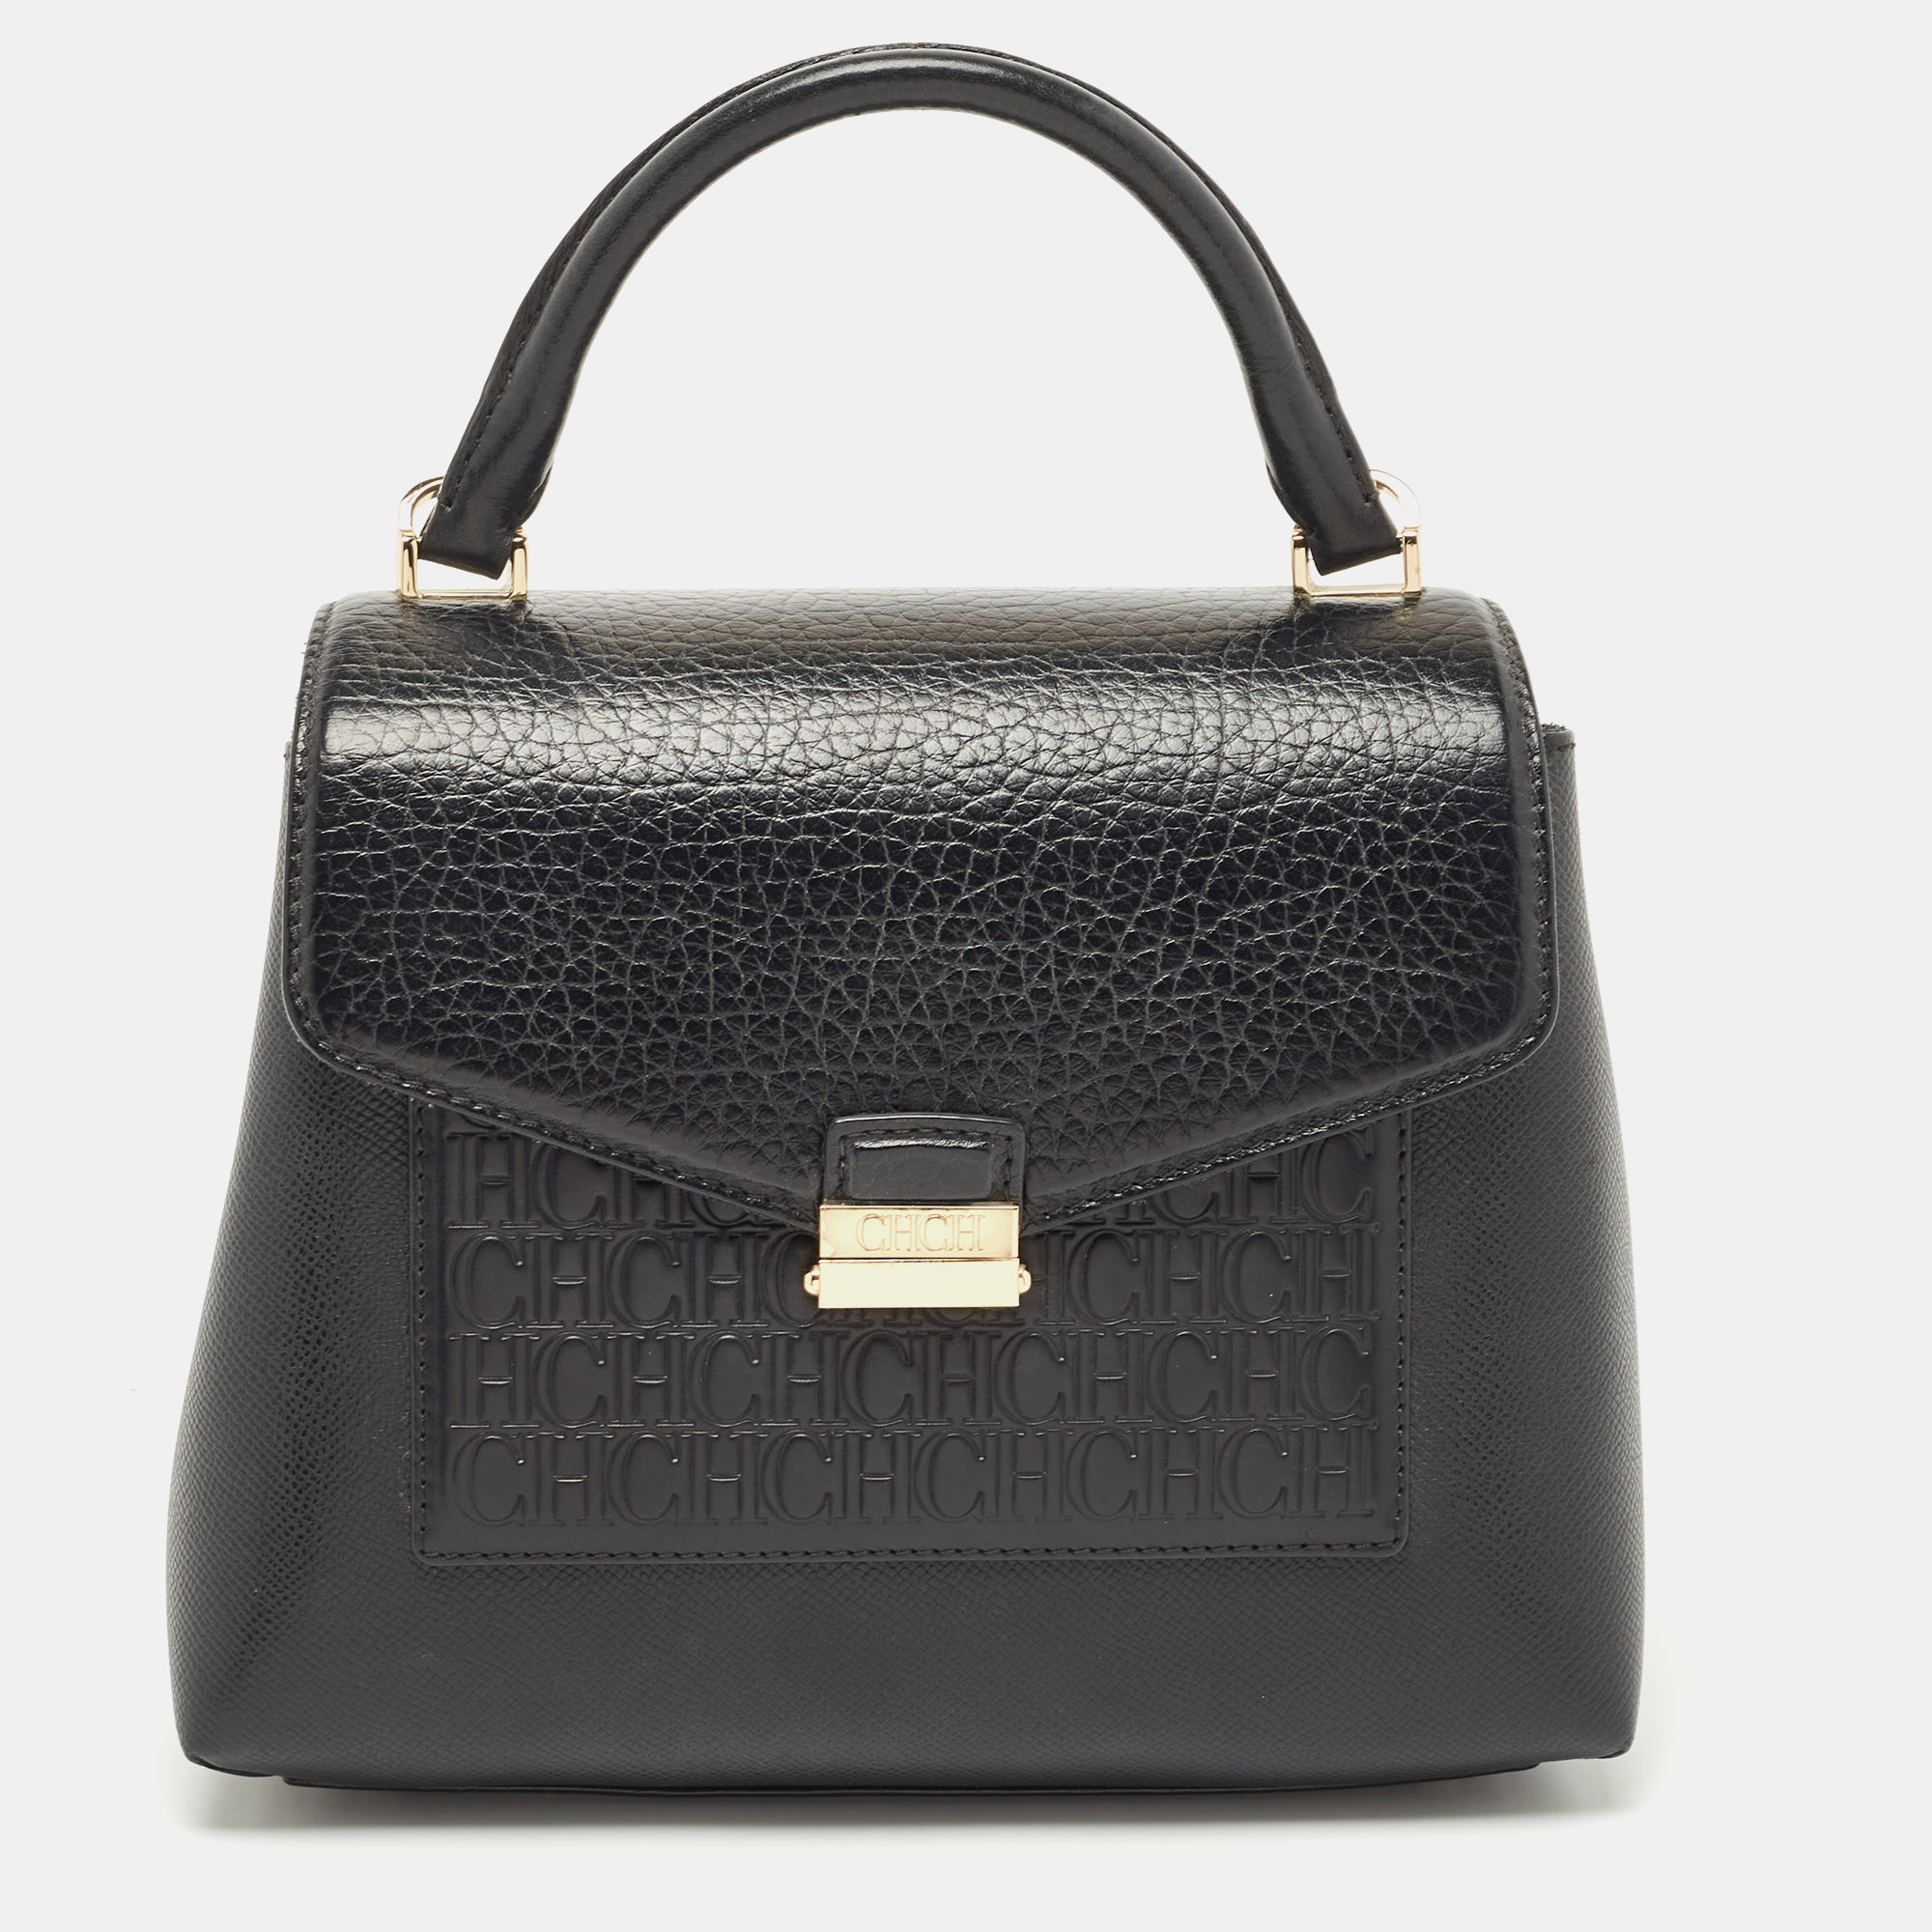 Carolina Herrera Black Leather Flap Crossbody Bag